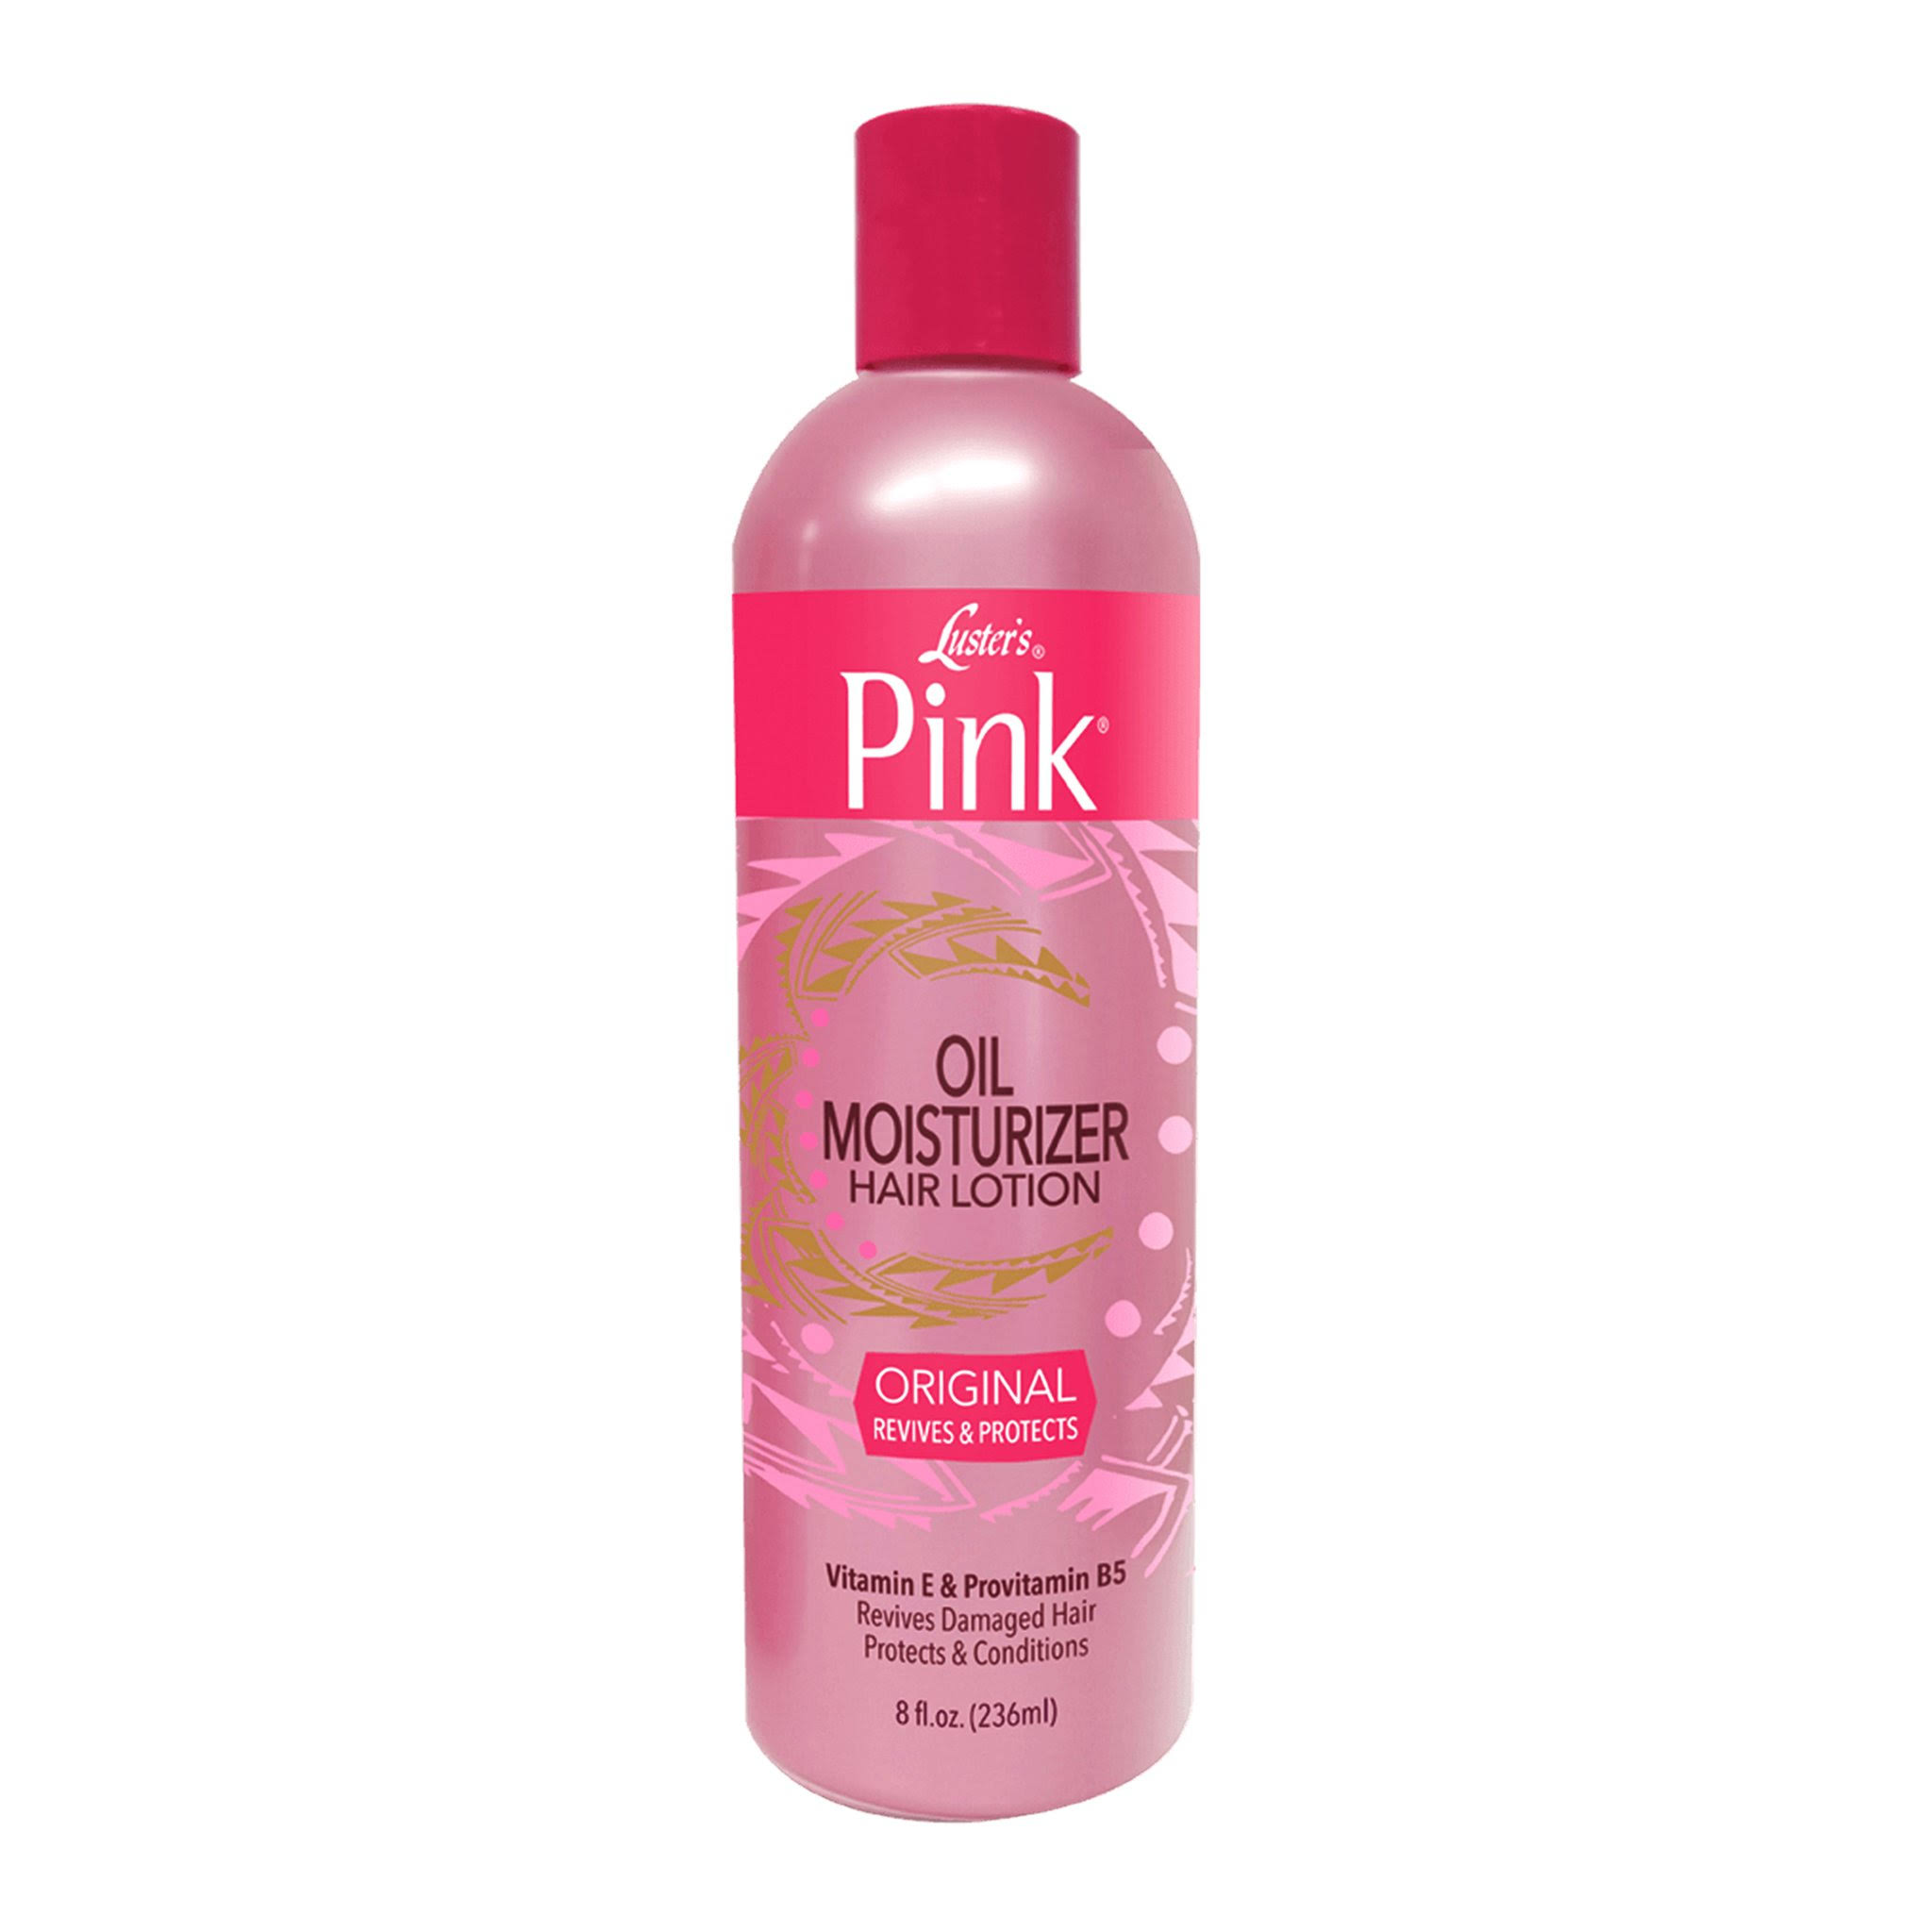 Luster's Pink Oil Moisturizer Hair Lotion - Original, 8oz